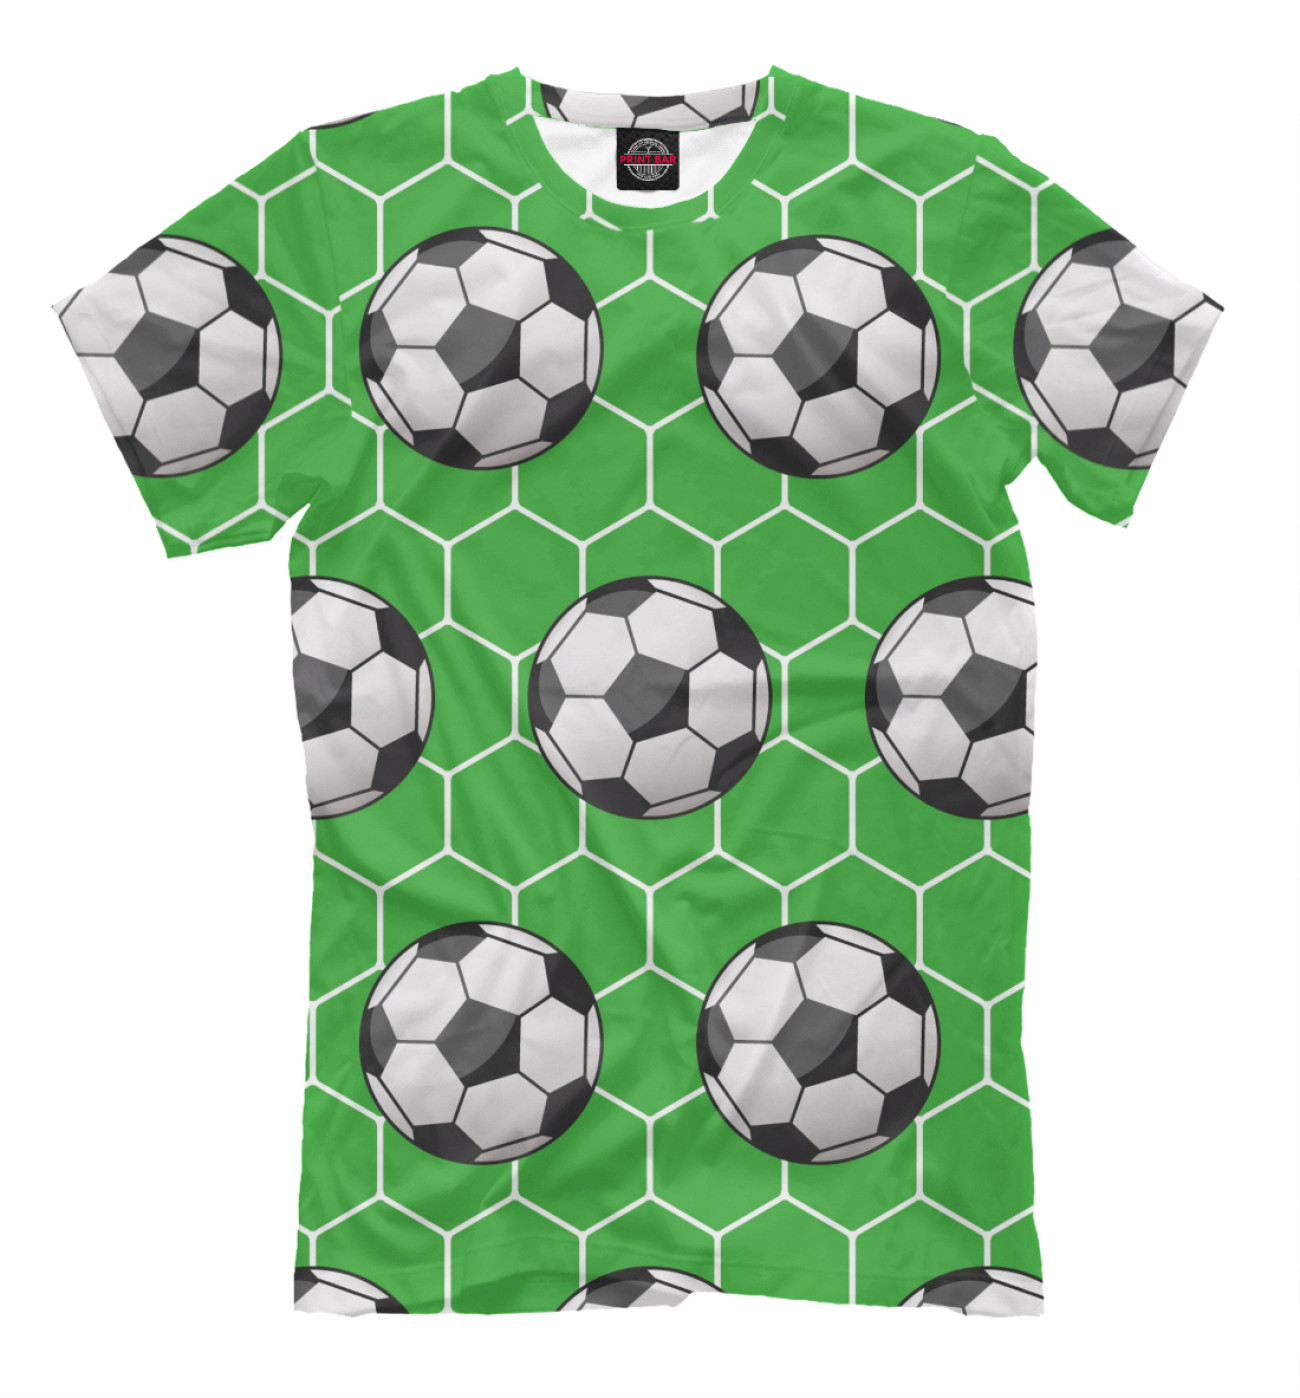 Мужская Футболка Футбольные мячи на зеленом фоне, артикул: FTO-419156-fut-2